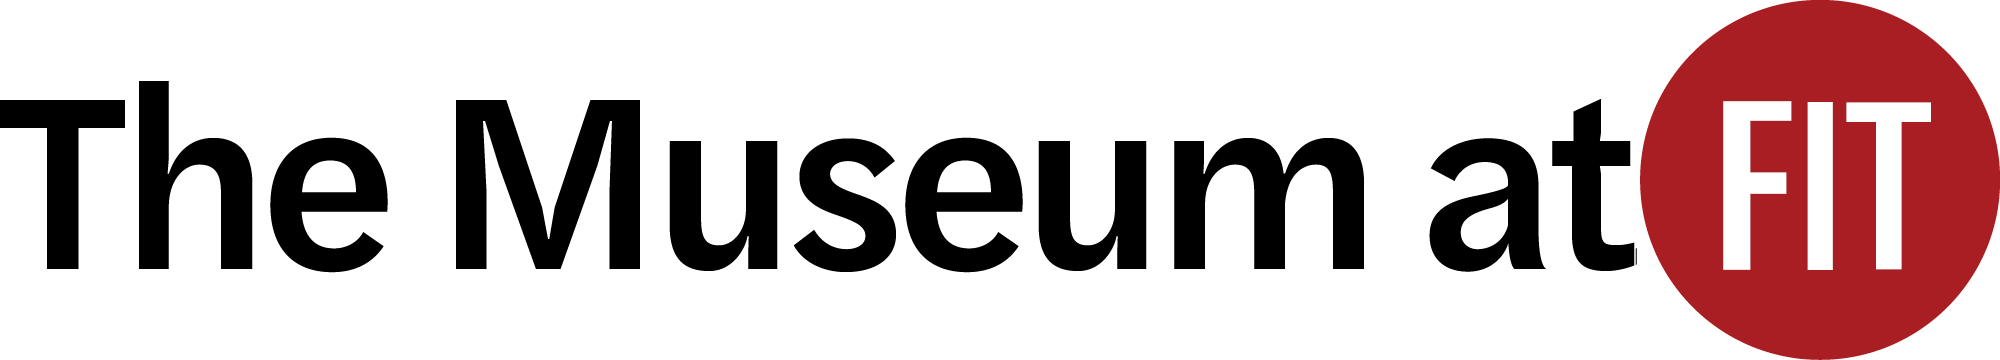 FITmuseum-header-logo.png